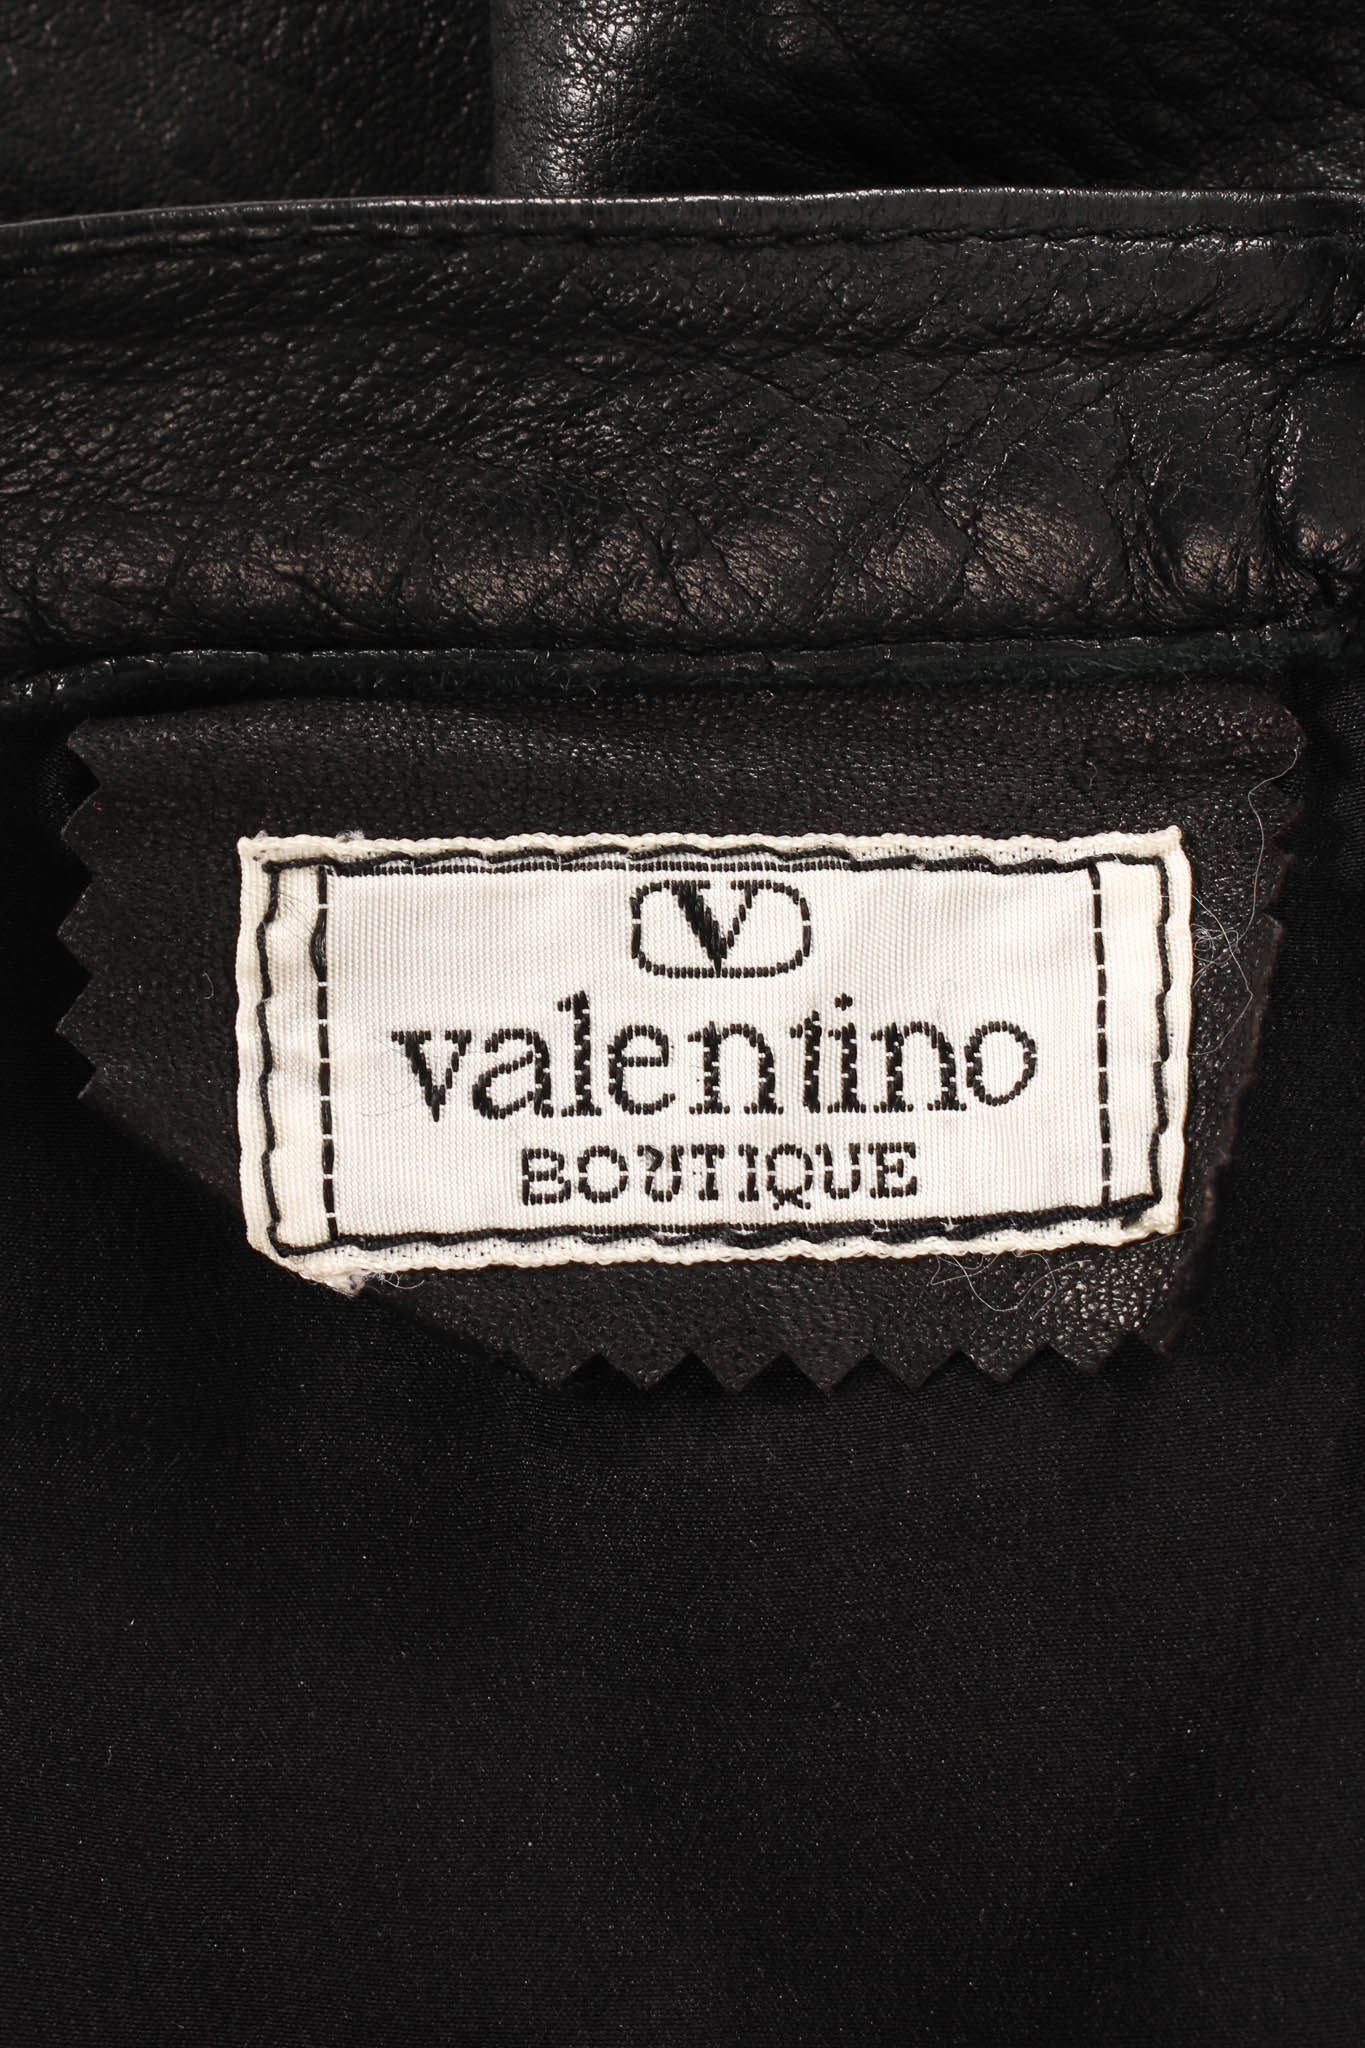 Vintage Valentino 1985 A/W Leather Fleur Beaded Top & Skirt Set tag @ Recess LA